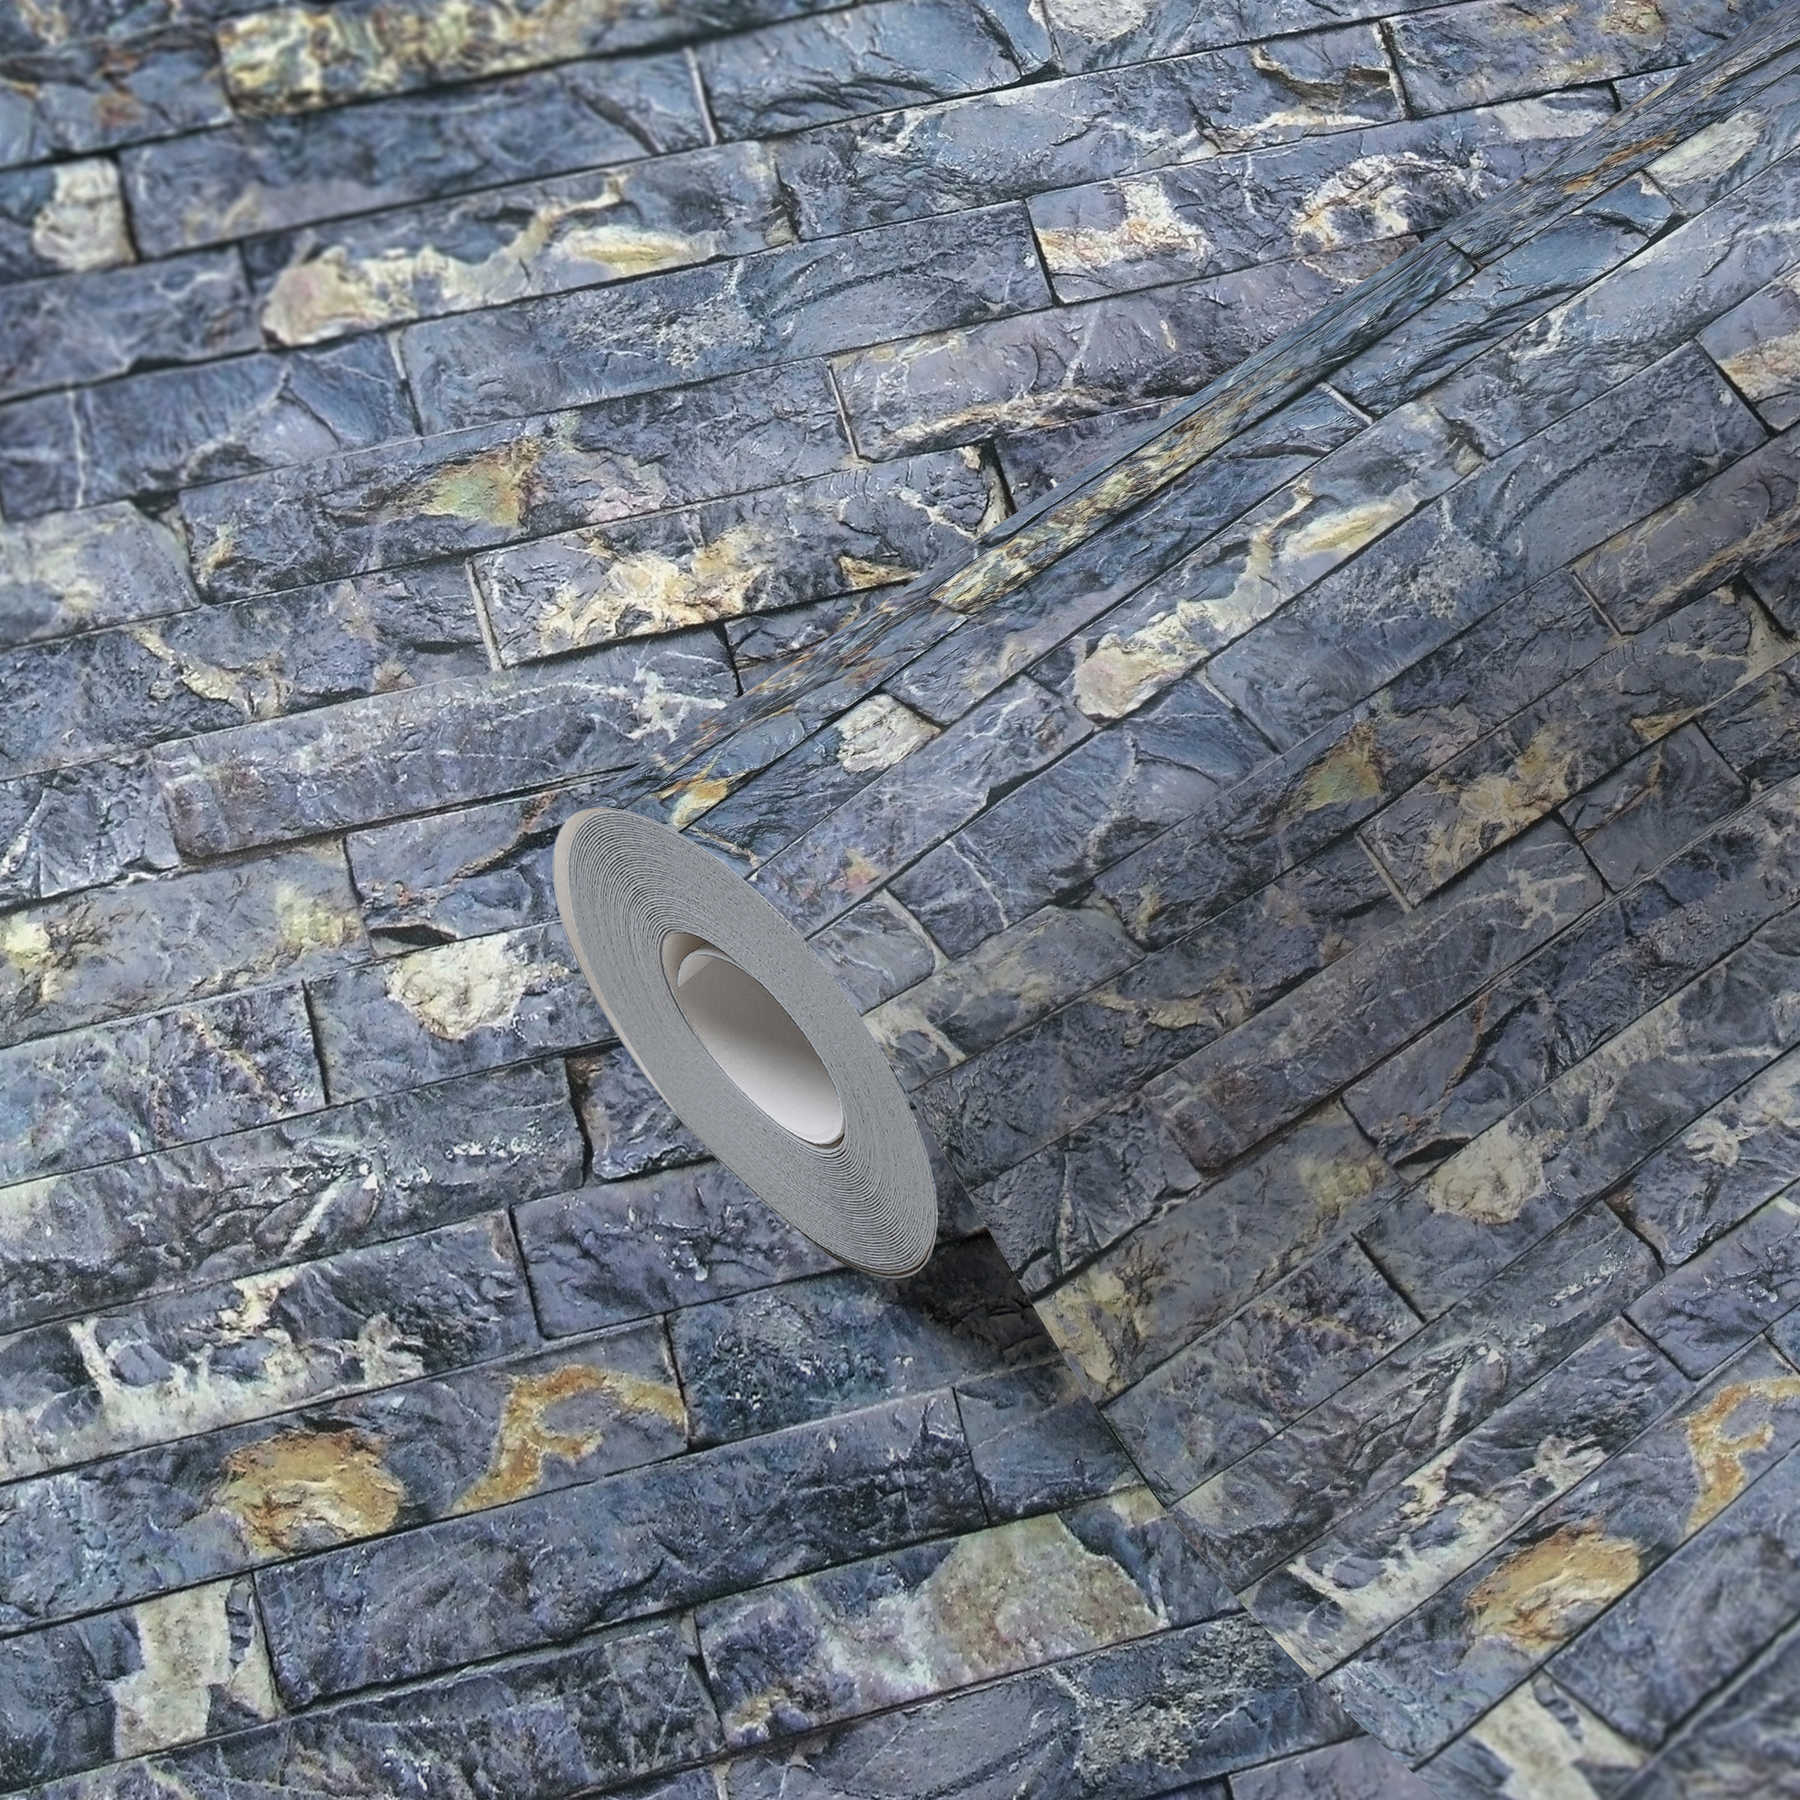             Wallpaper stone look with 3D masonry quartz stone - blue, grey
        